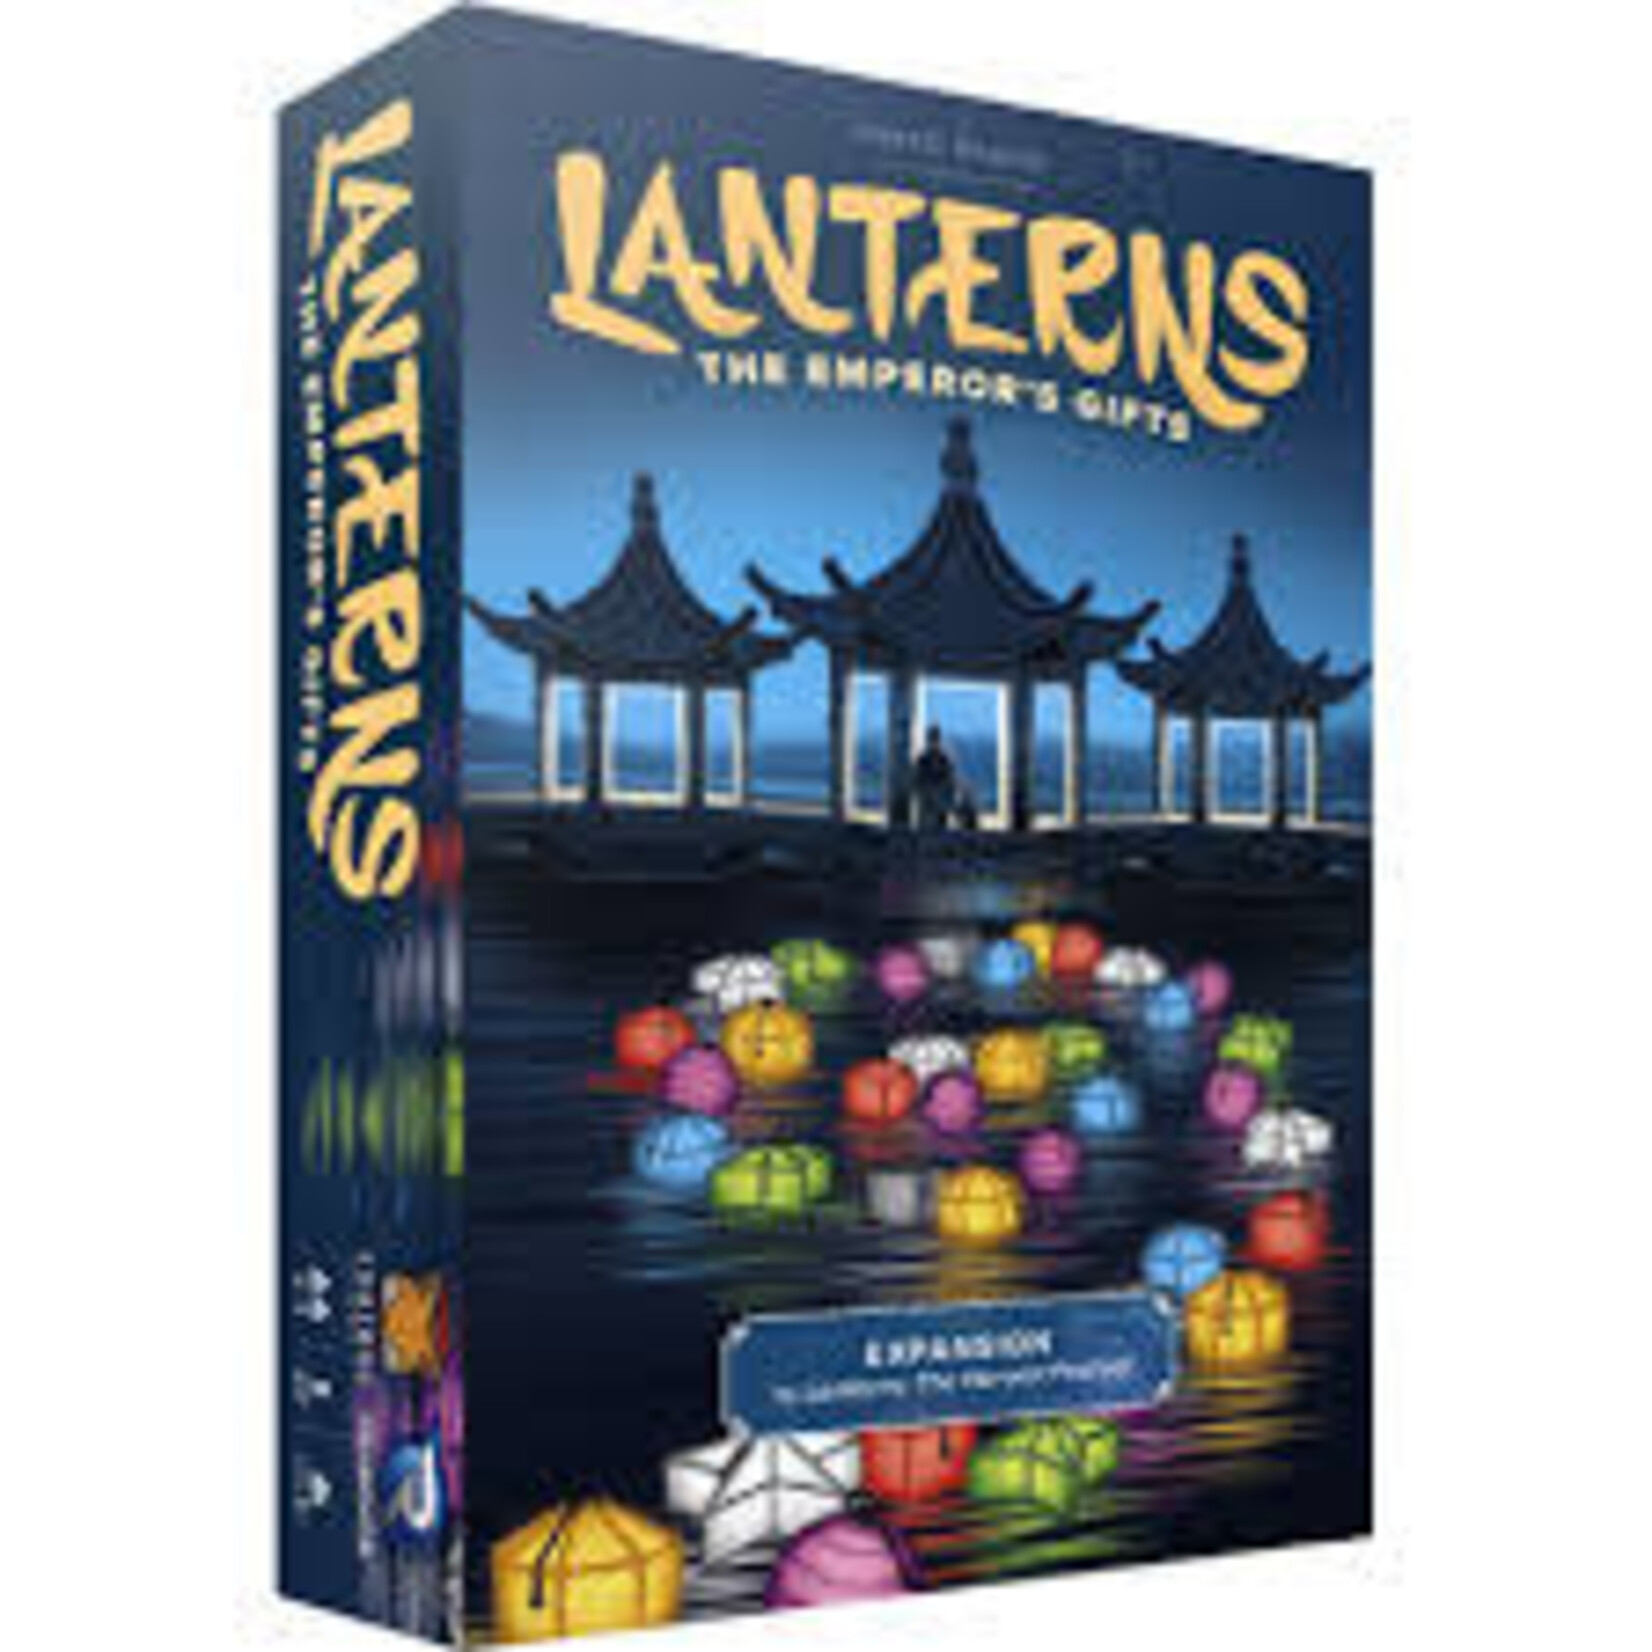 RENEGADE Lanterns: the Emperor's Gifts